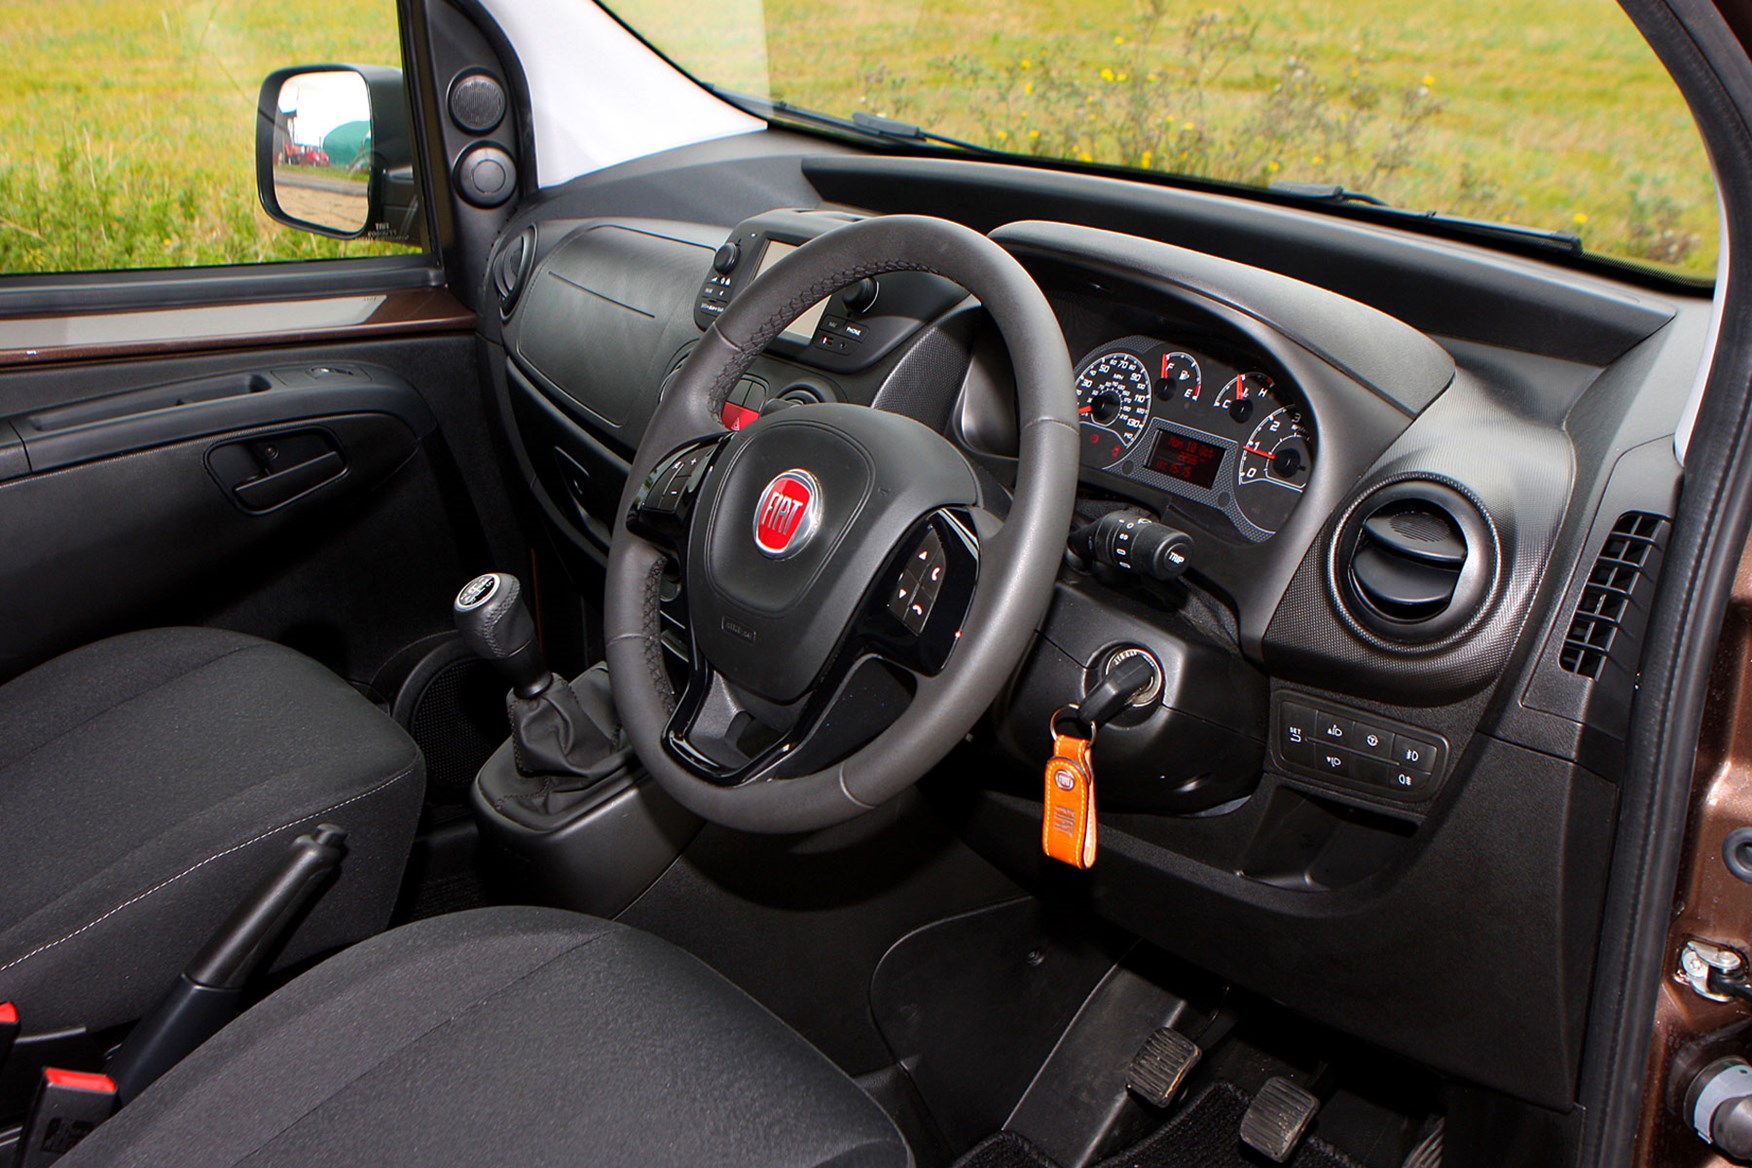 Fiat Fiorino review - cab interior